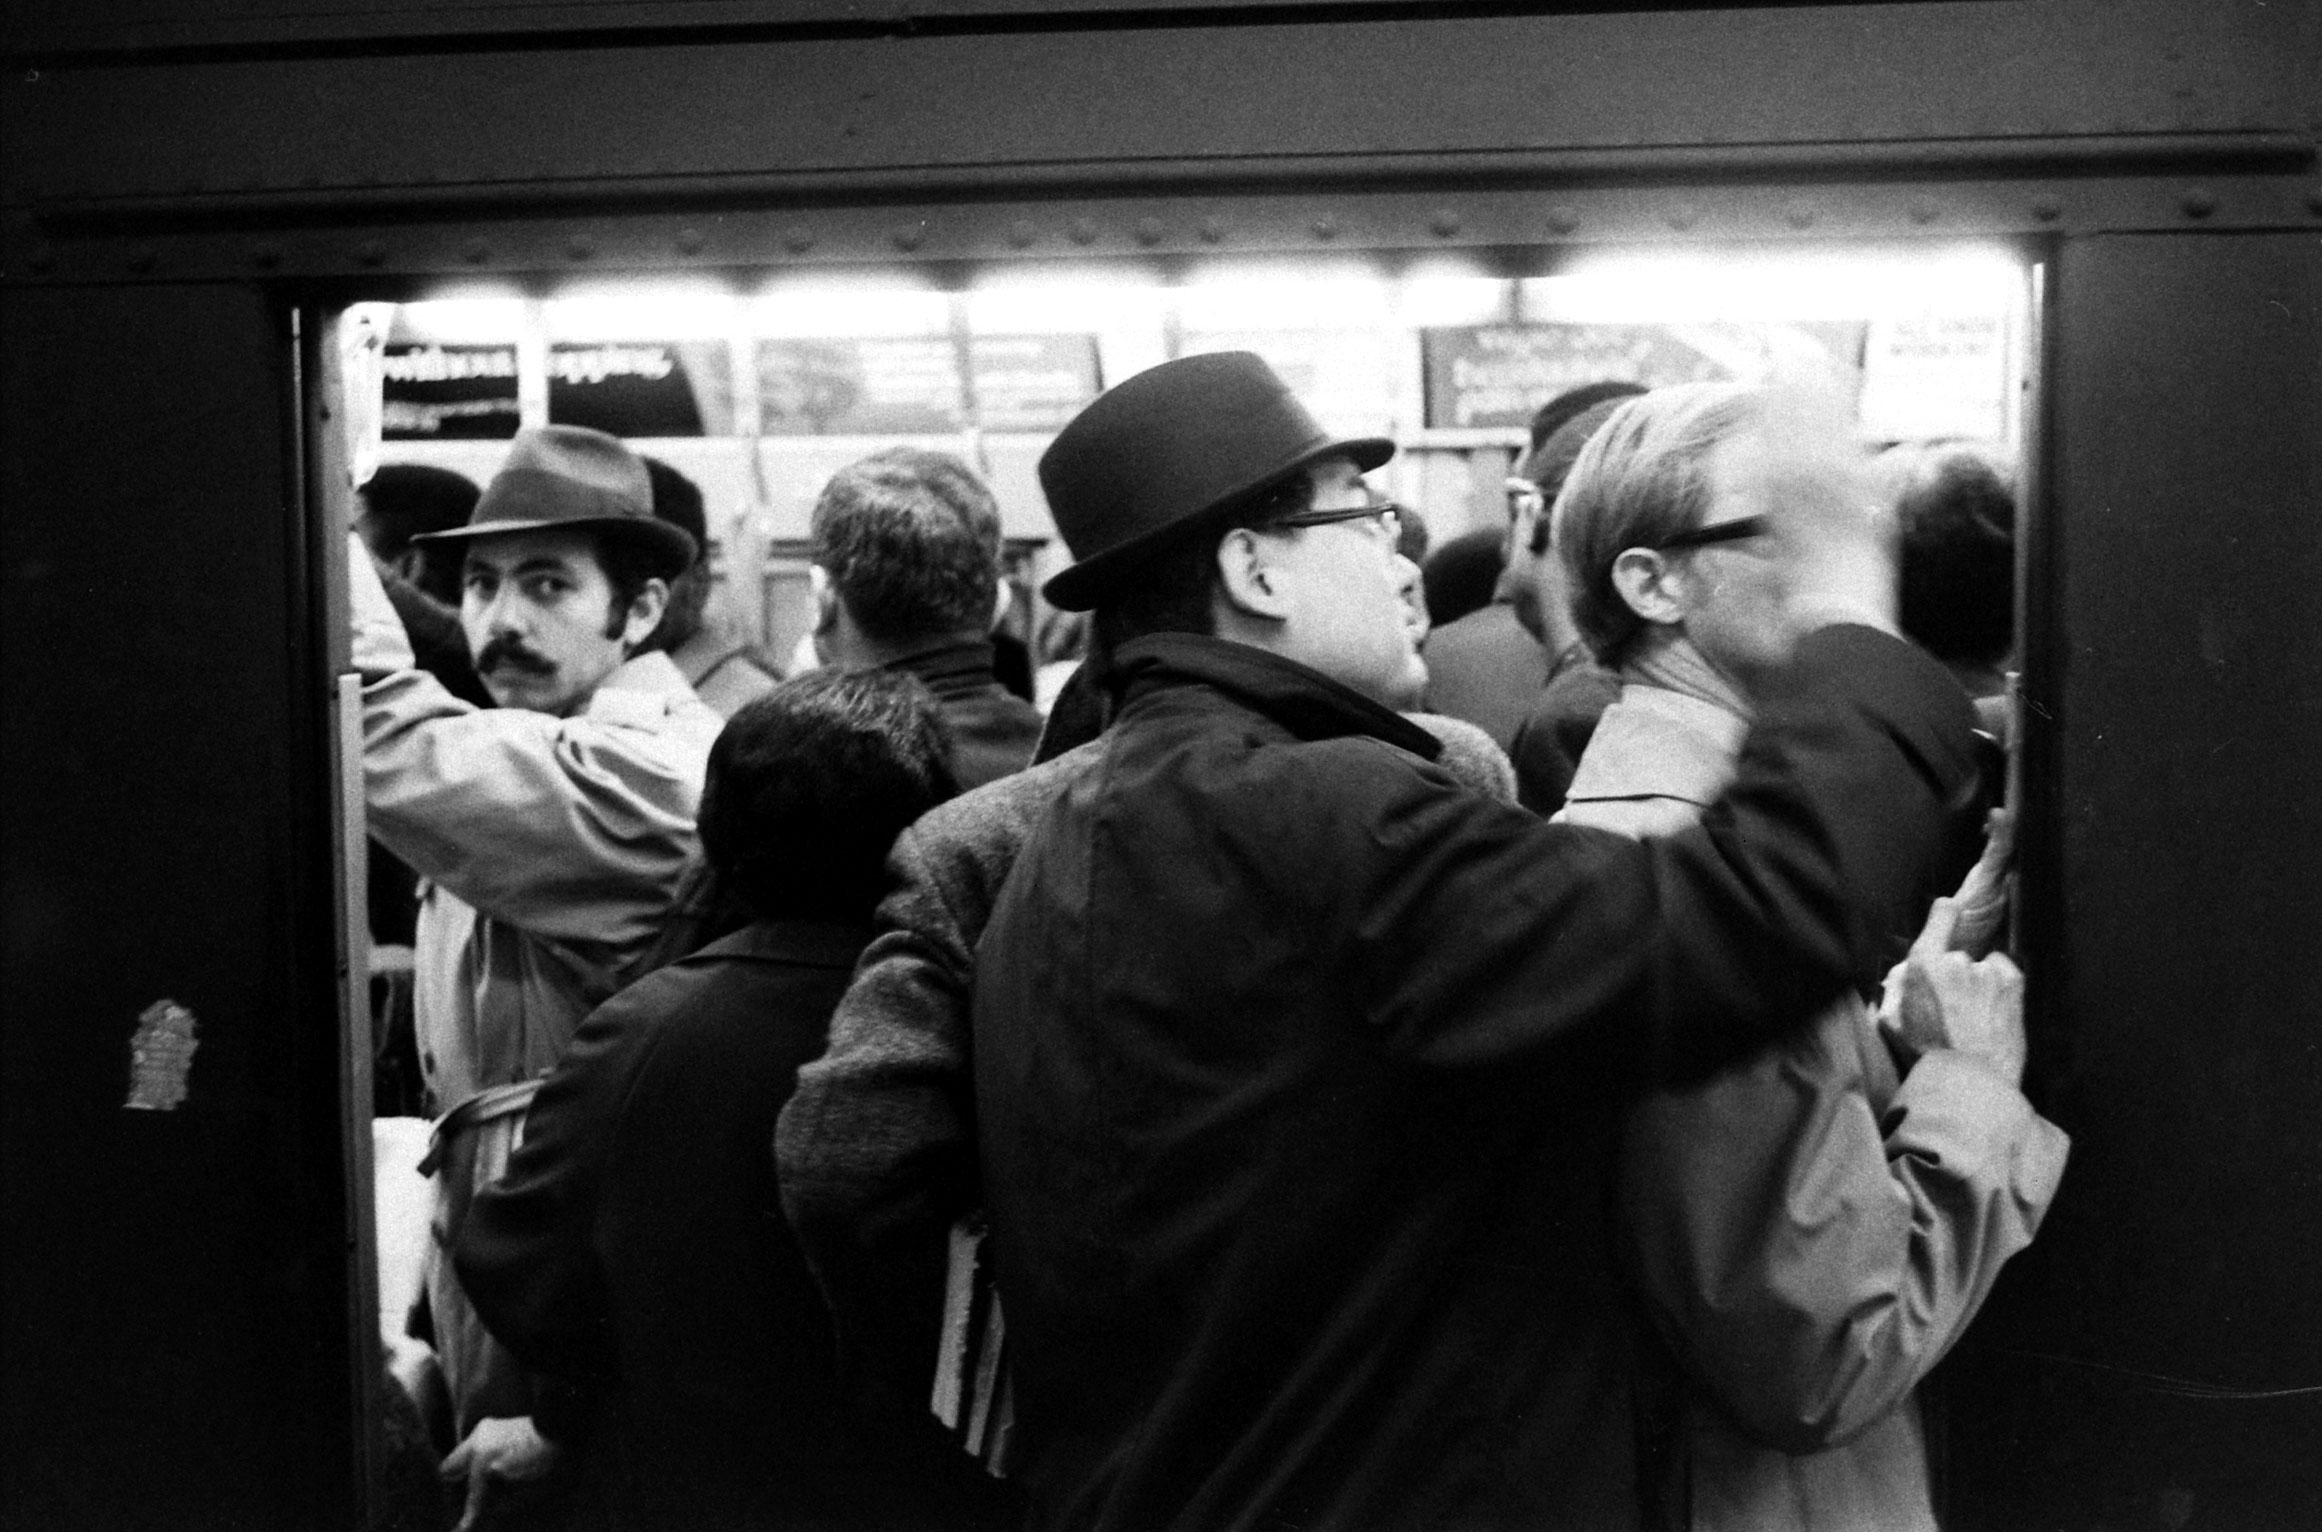 Scene on the New York subway, 1969.